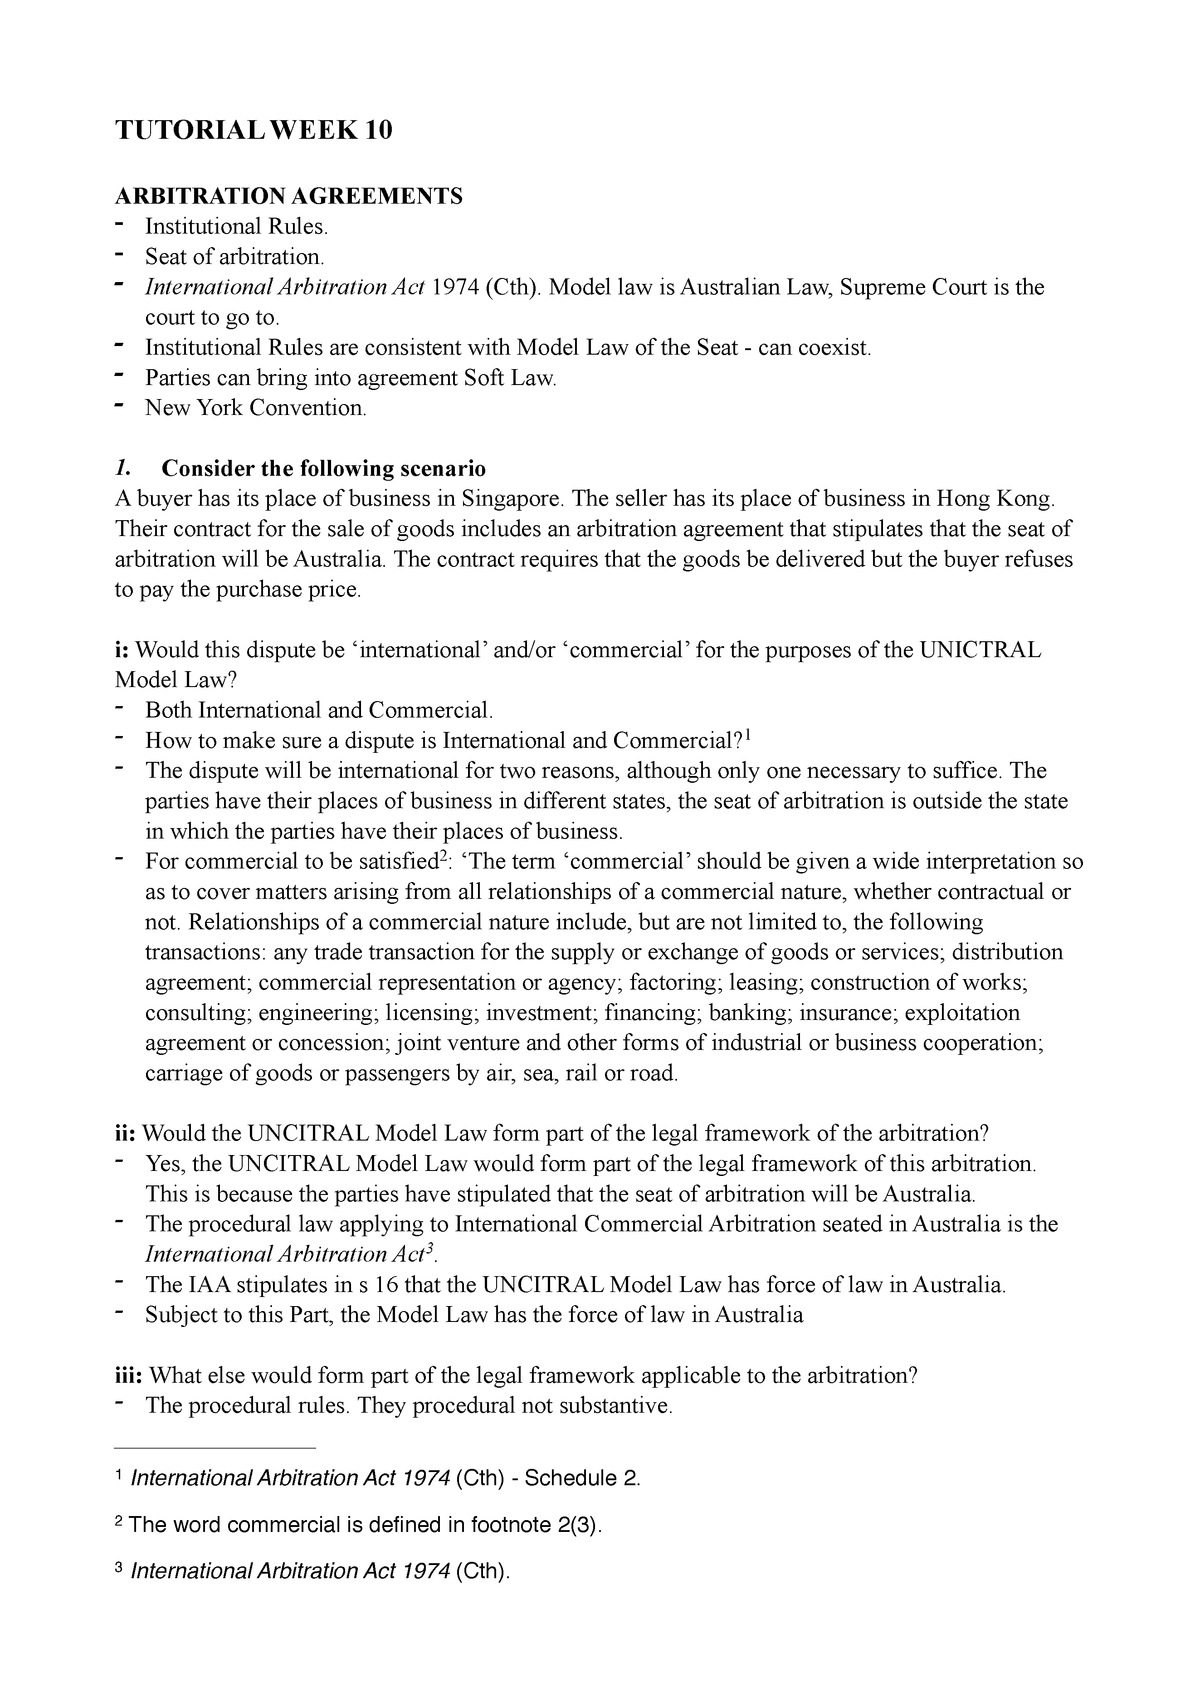 Arbitration Agreement Form Llb103 W10 Tutorial Tute Notes Llb103 Dispute Resolution Studocu